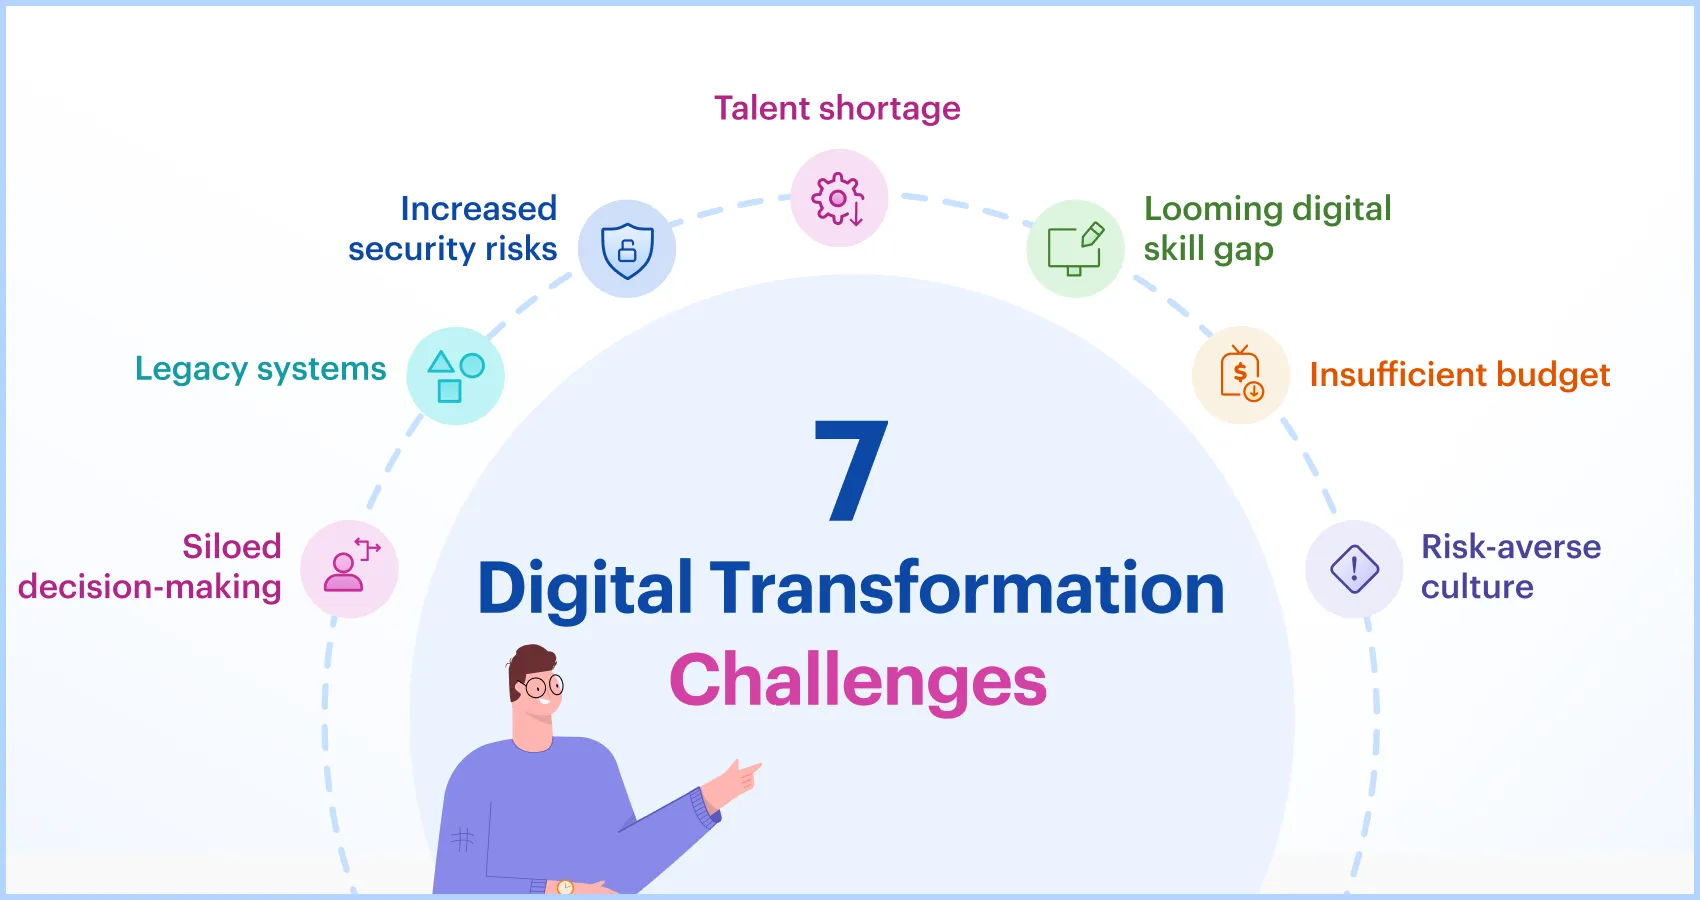 Digital Transformation Challenges